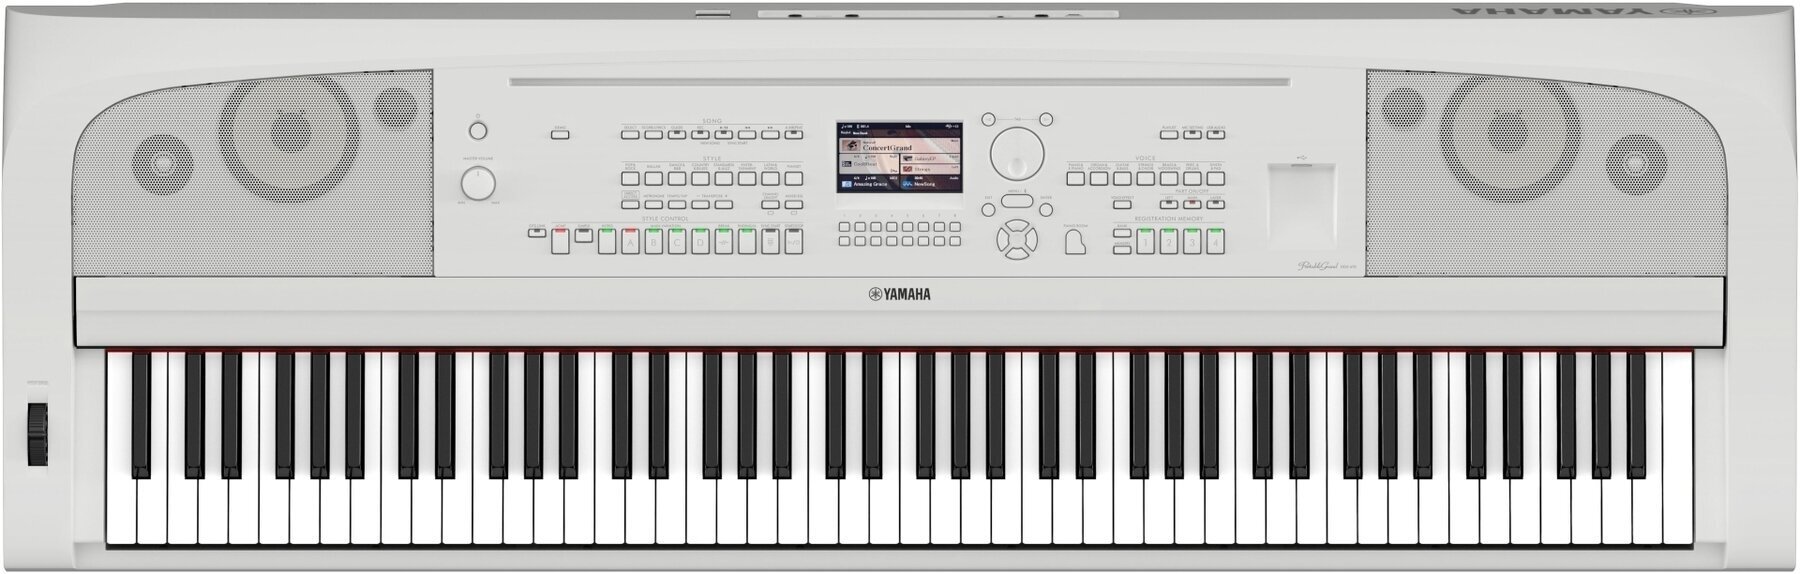 Digital Stage Piano Yamaha DGX 670 Digital Stage Piano (Nur ausgepackt)